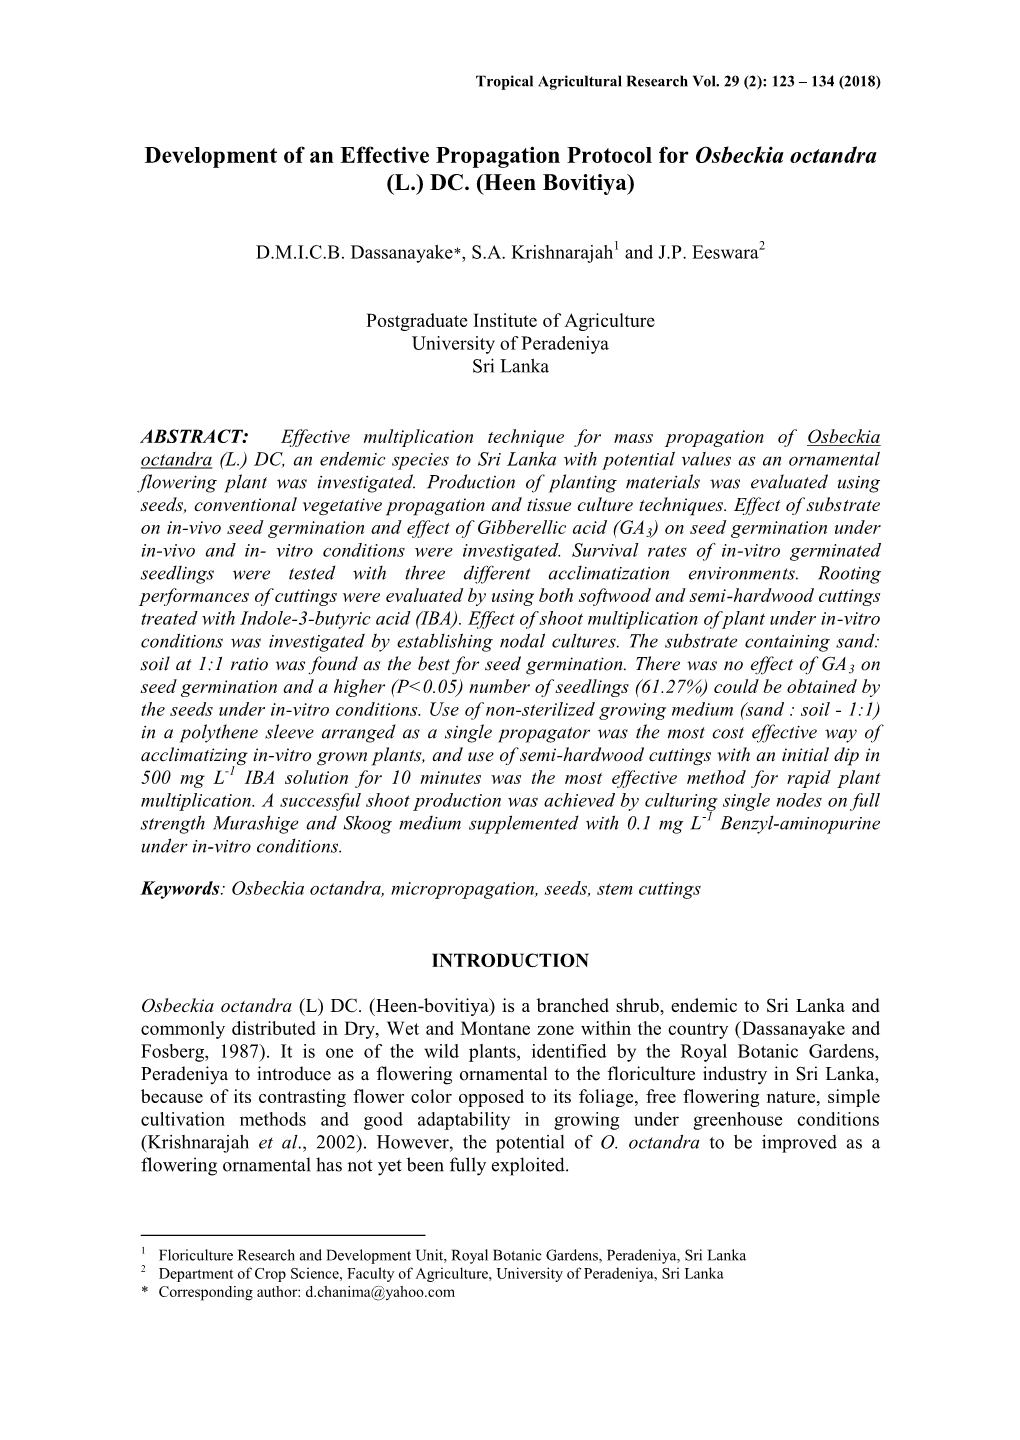 Development of an Effective Propagation Protocol for Osbeckia Octandra (L.) DC